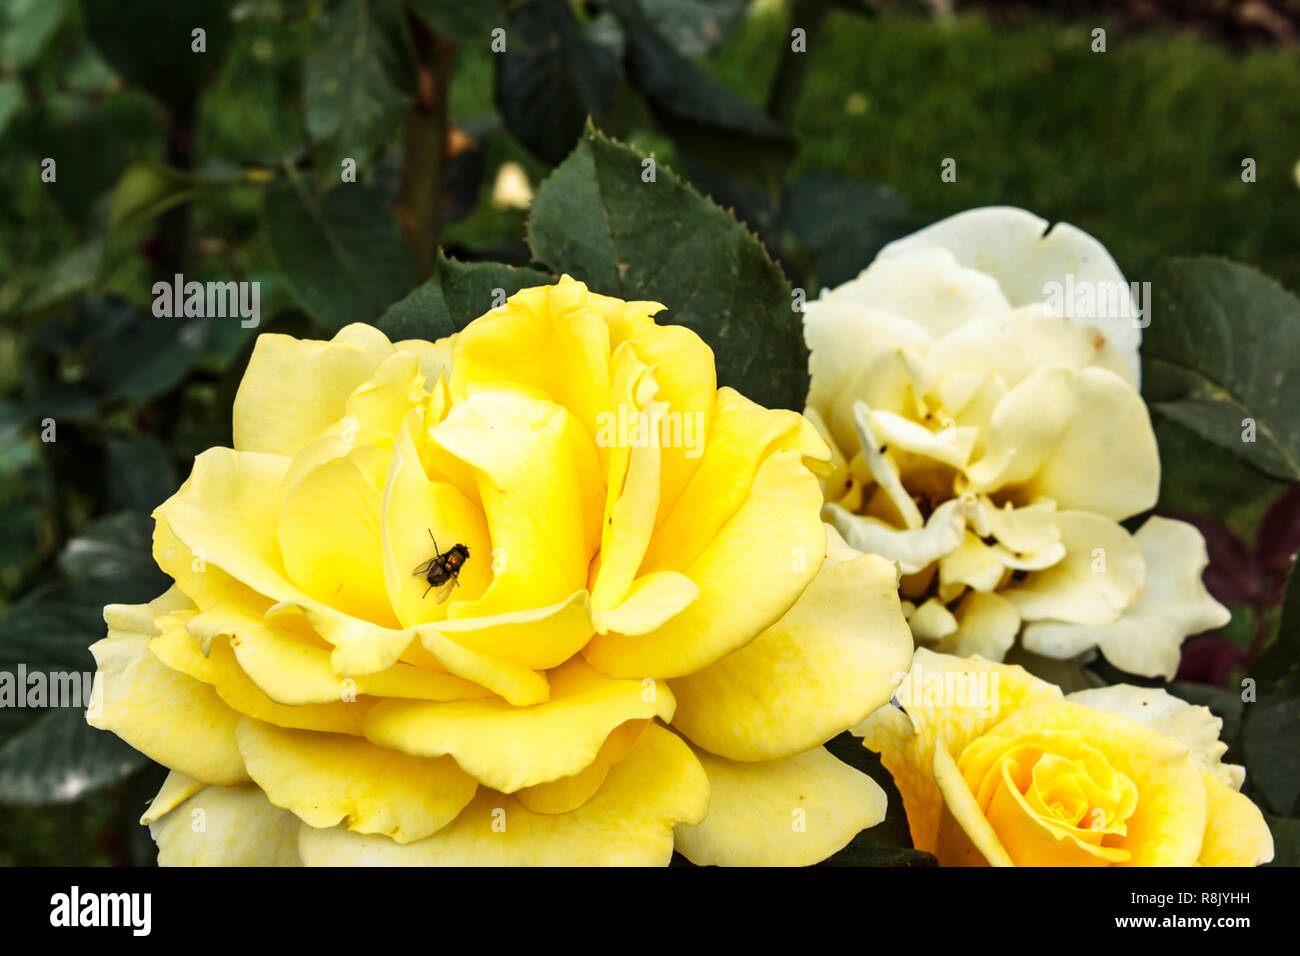 dark shiny fly on beautiful yellow rose in garden Stock Photo